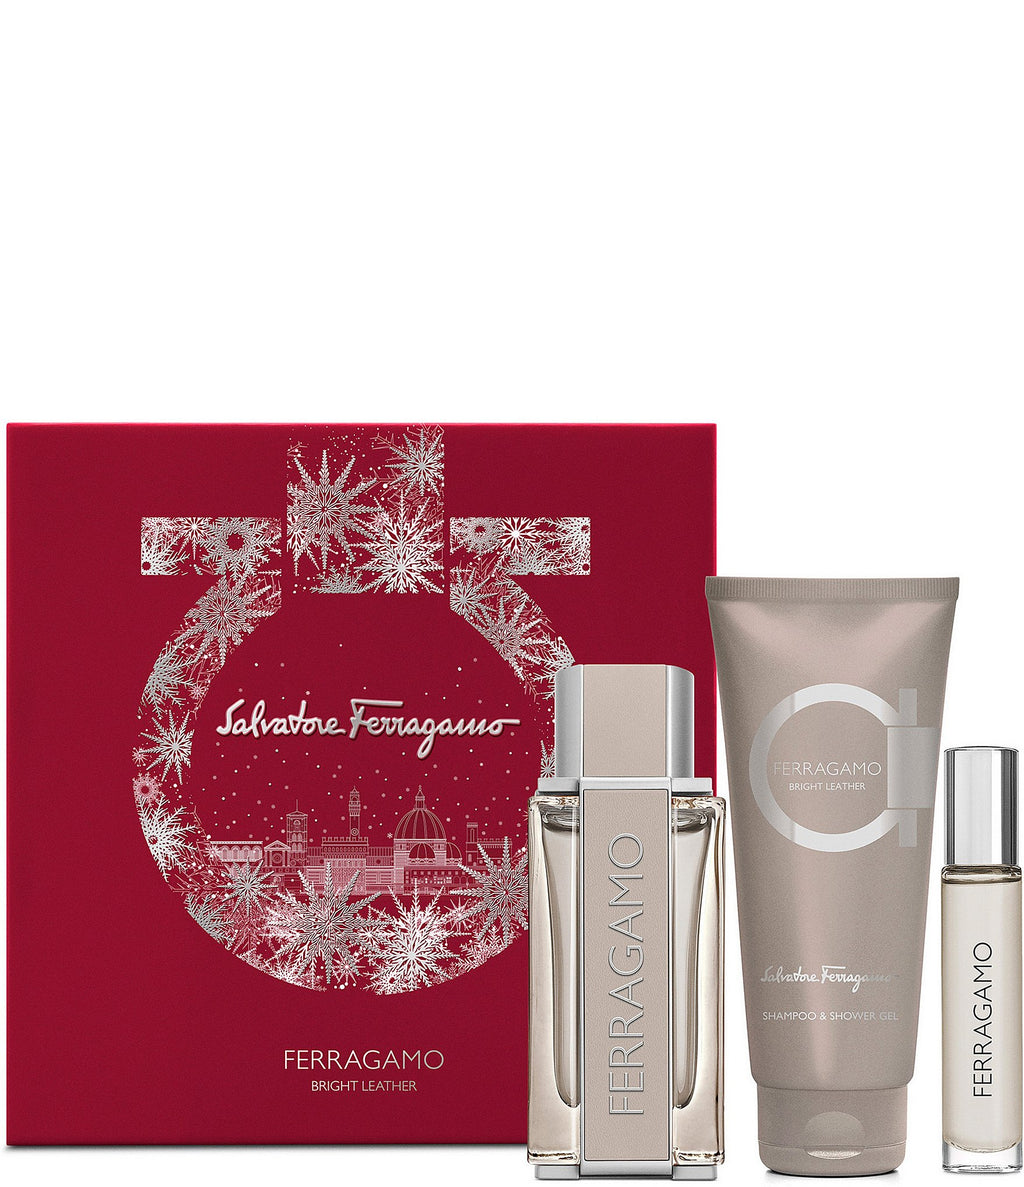 Bvlgari's beloved Eau Parfumée fragrances debut in key Hudson's Bay stores  across Canada • Scent Lodge